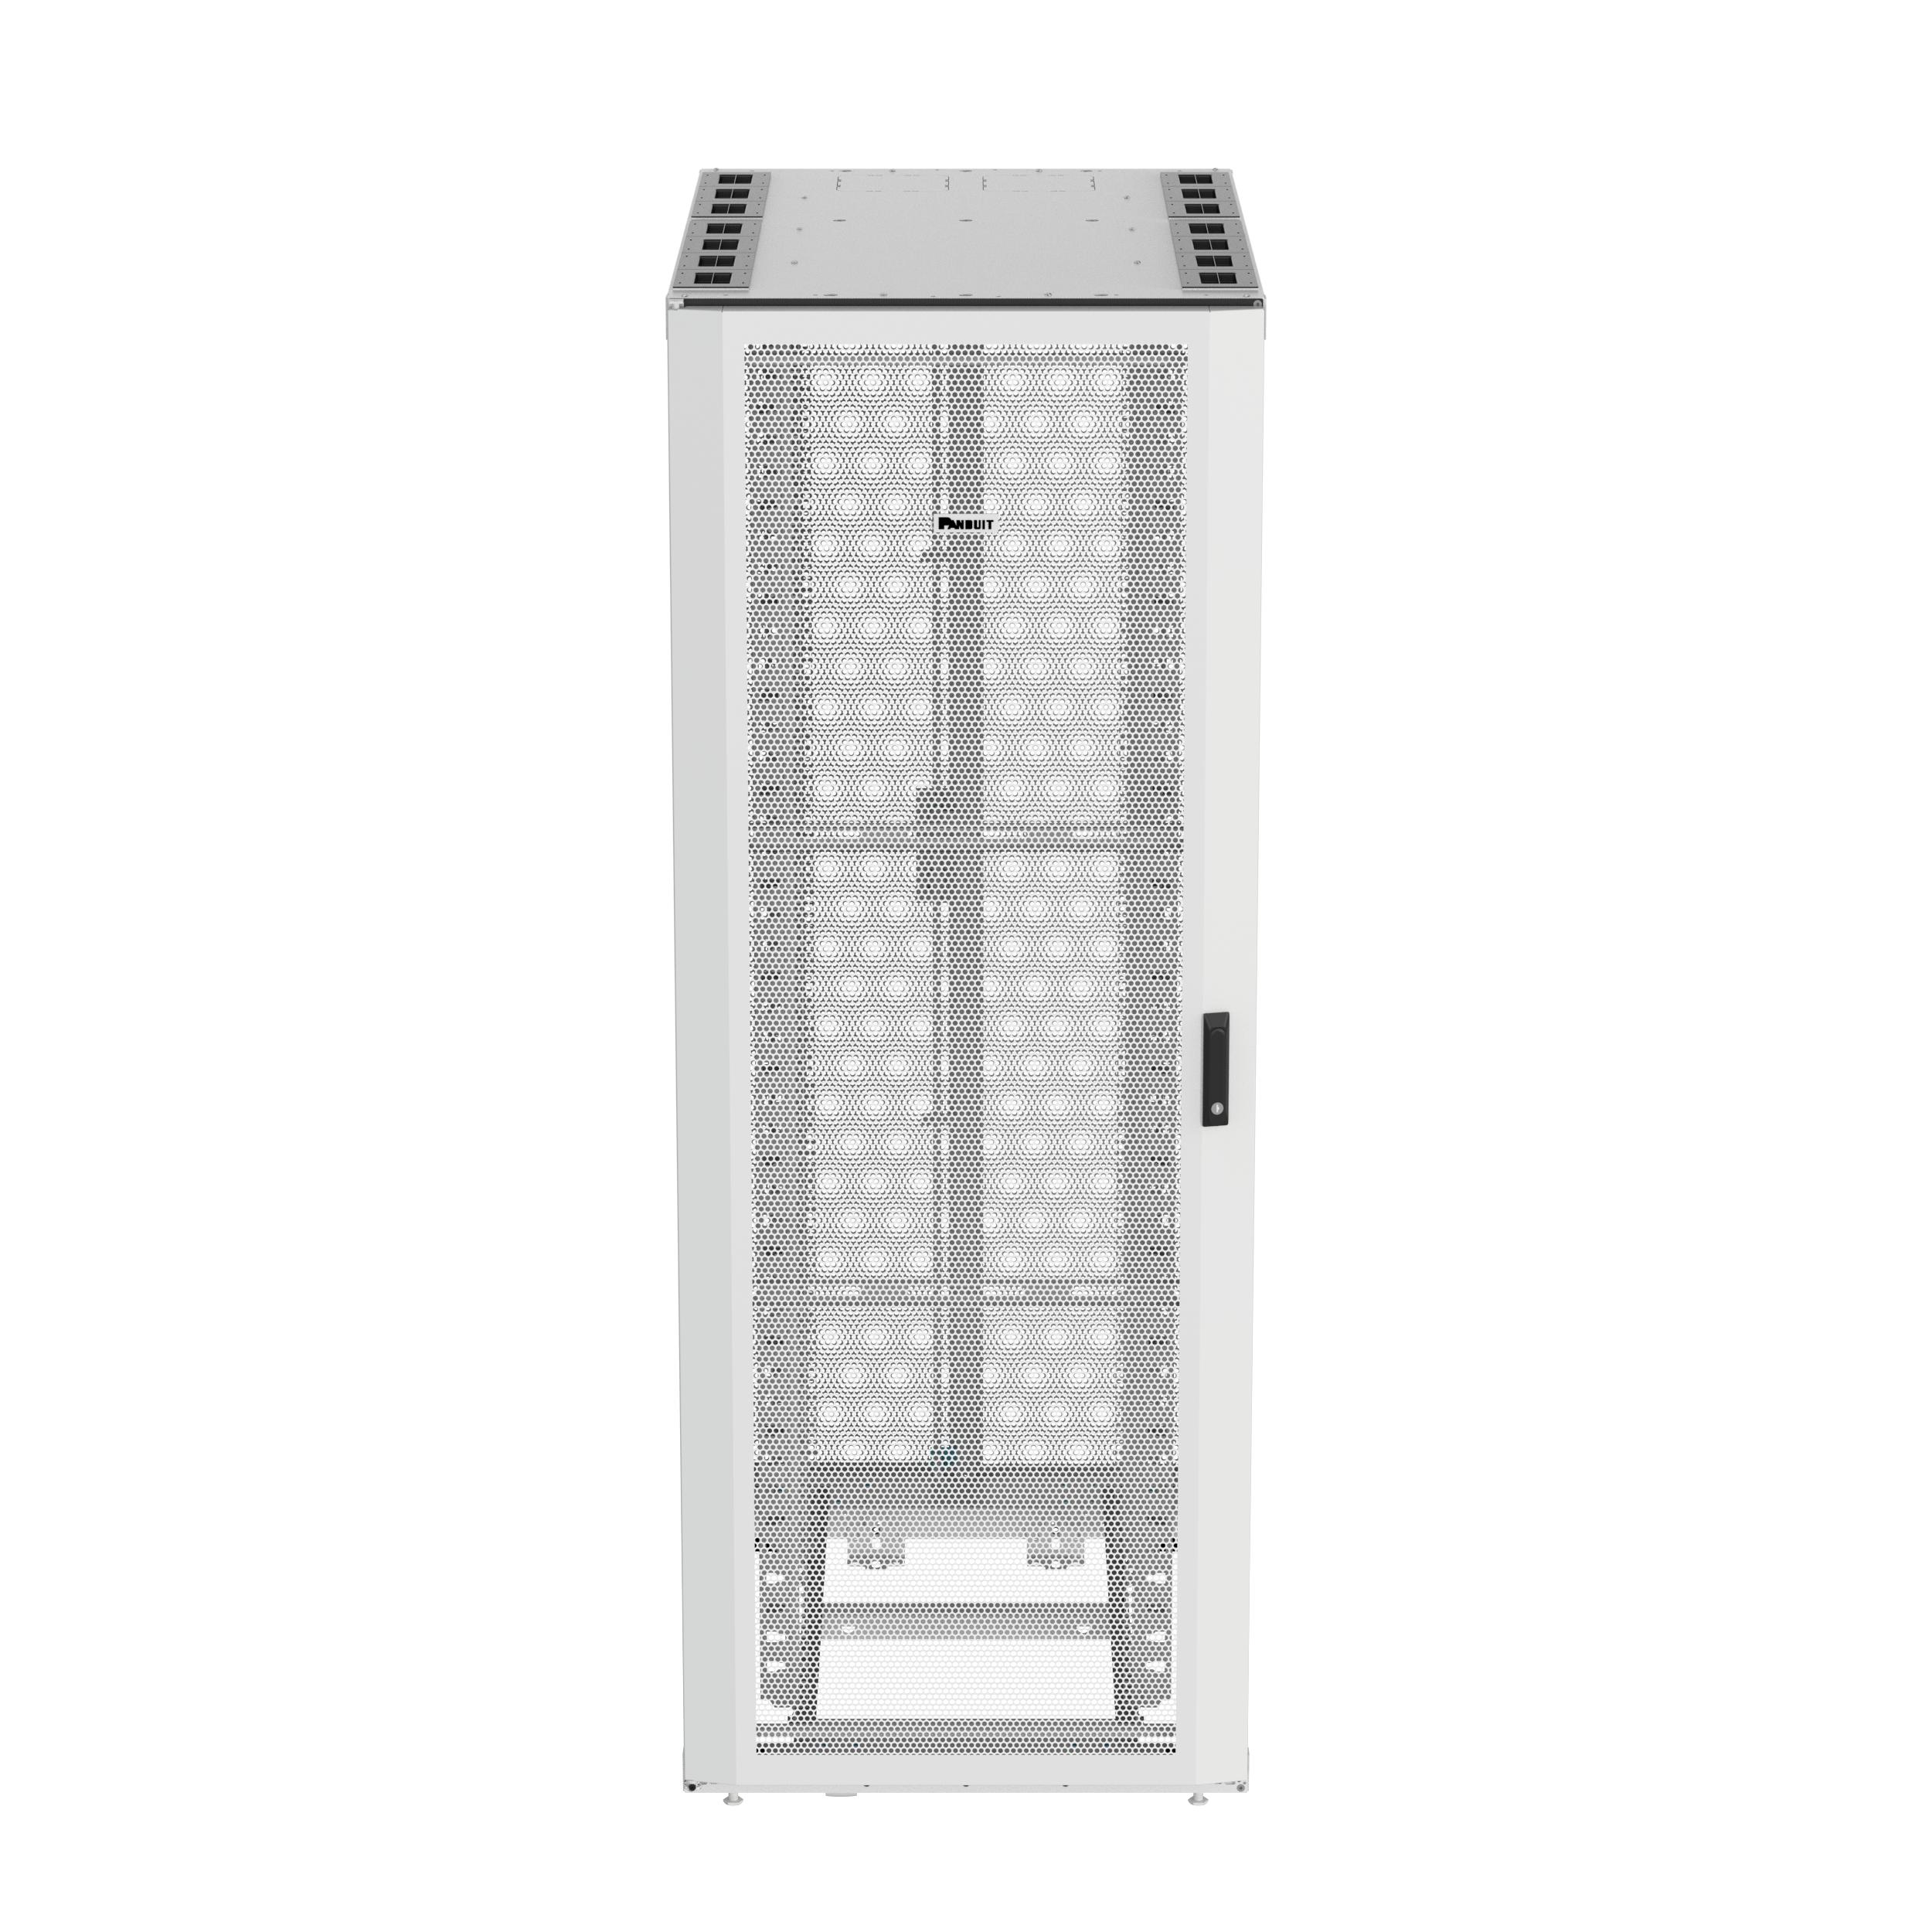 Panduit S8812WU Net-Access™ S-Type Server Cabinet, 48 RU, White